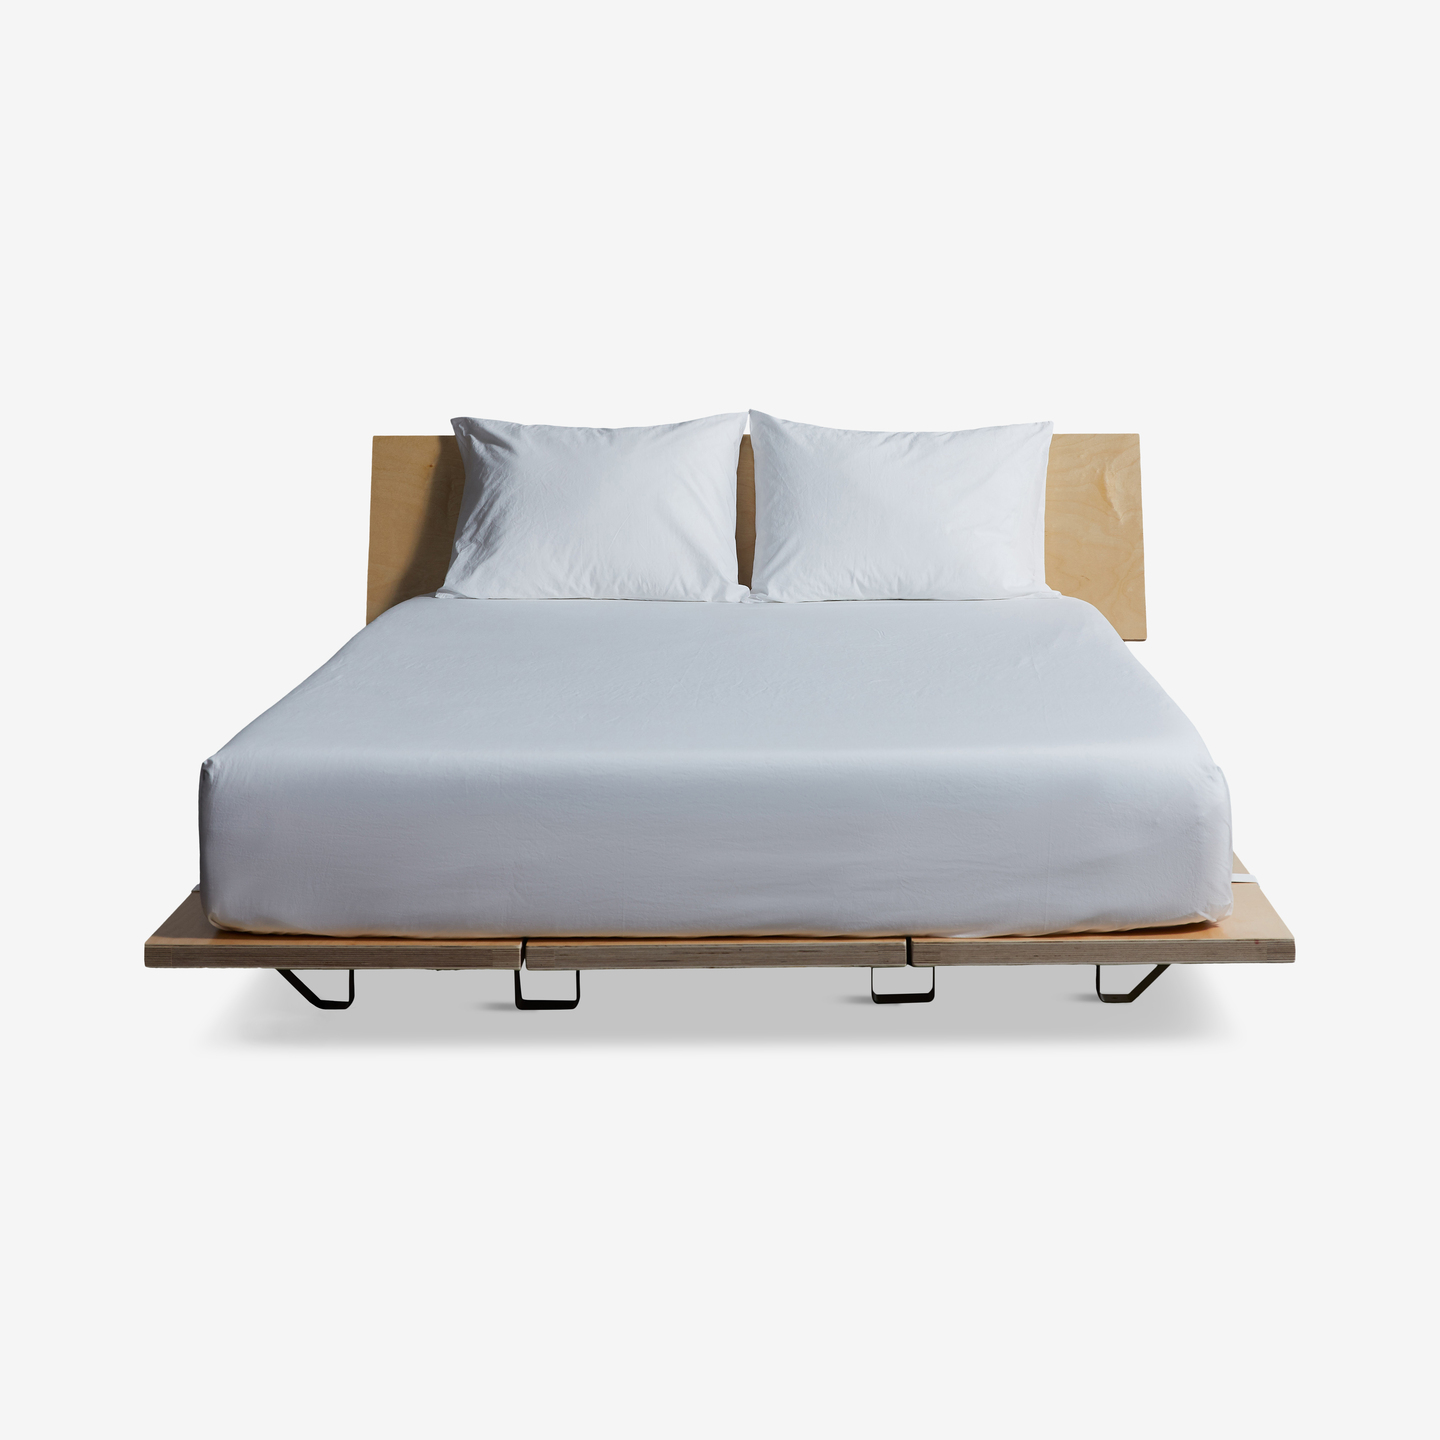 54_Floyd-Bed-Birch-Queen_Flat-Frontbed-made-No-Duvet_Mid-Century_Bedroom-7 2020